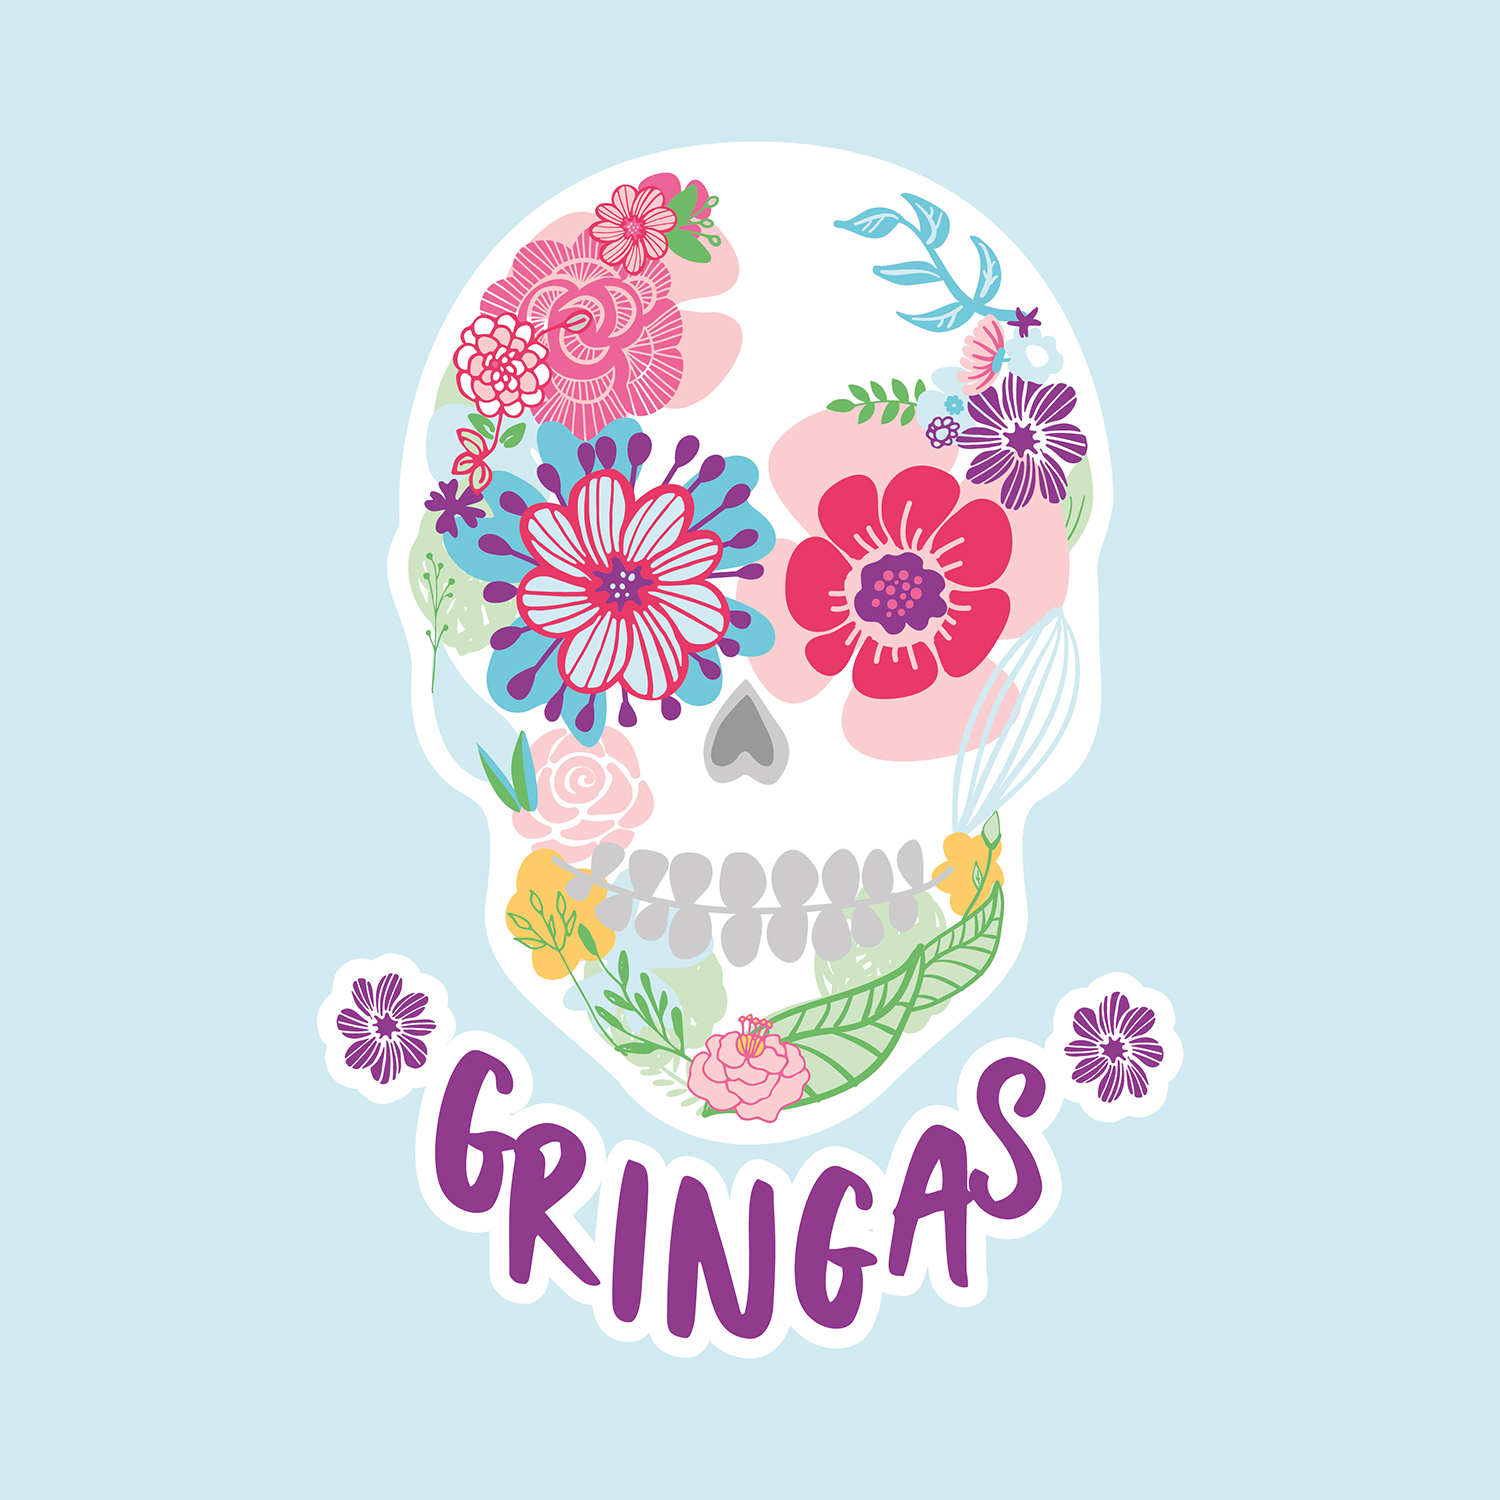 Gringas Logo